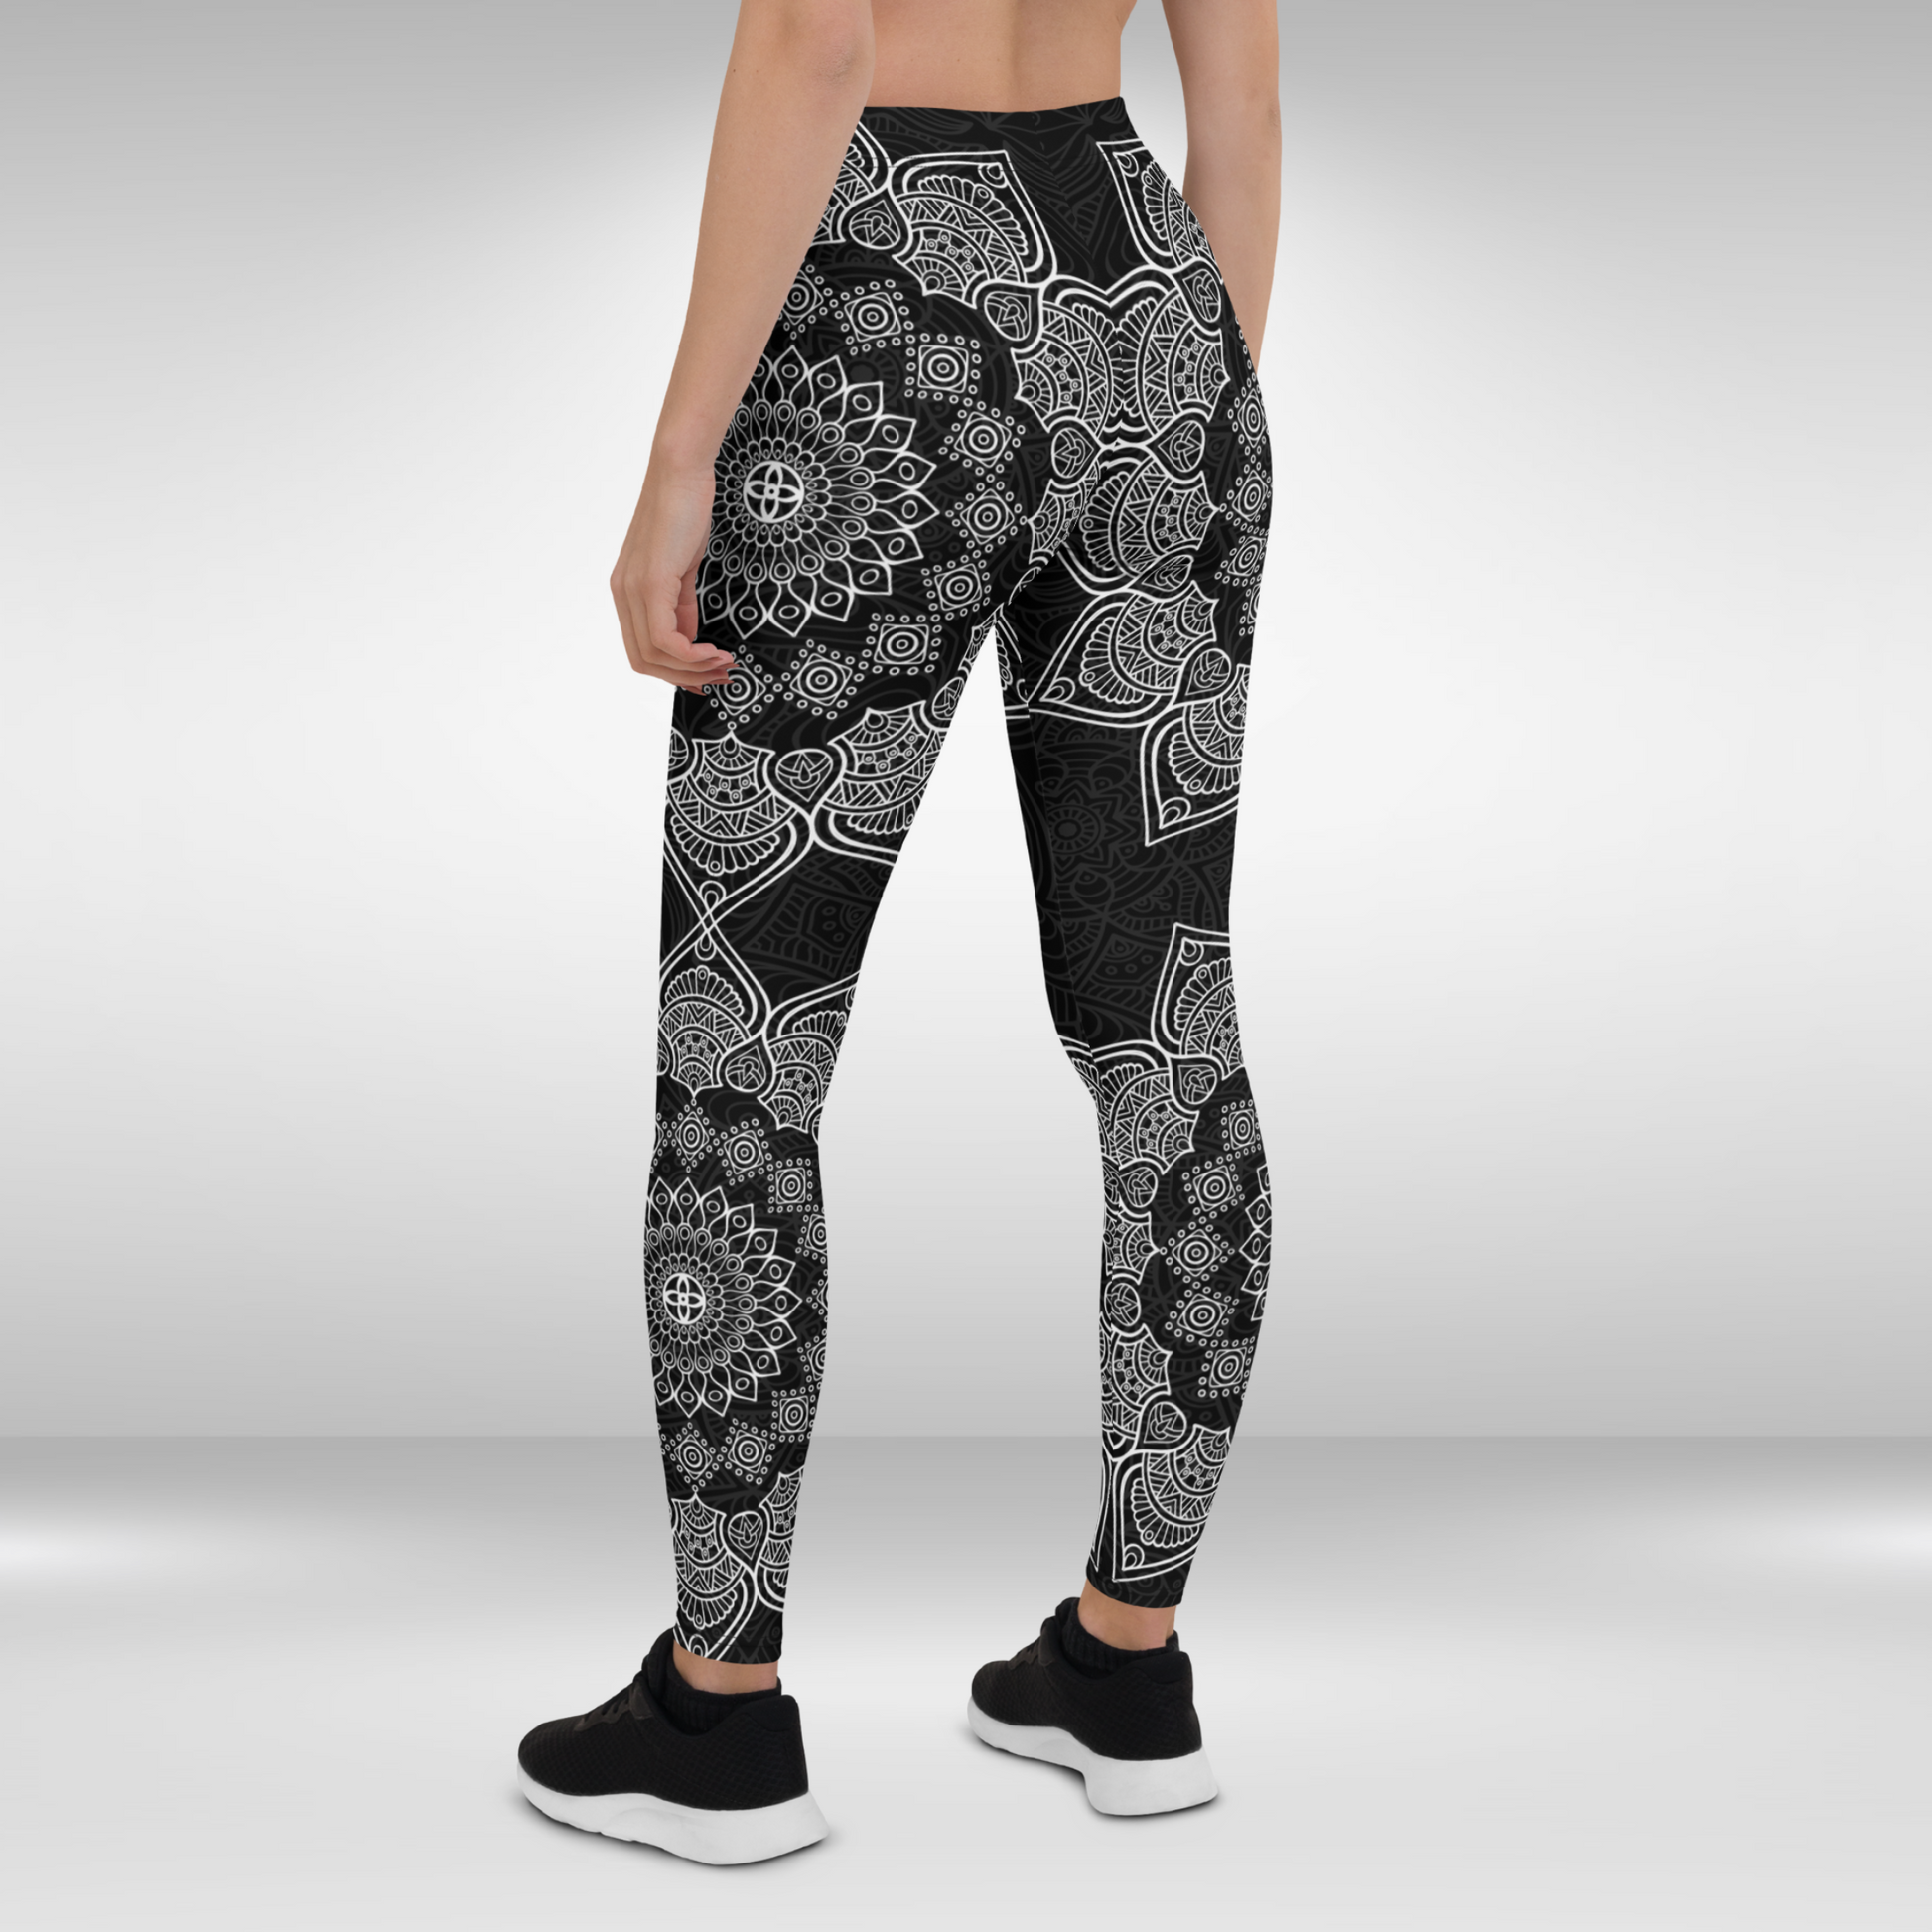 Women Gym Legging - Black and White Mandala Print